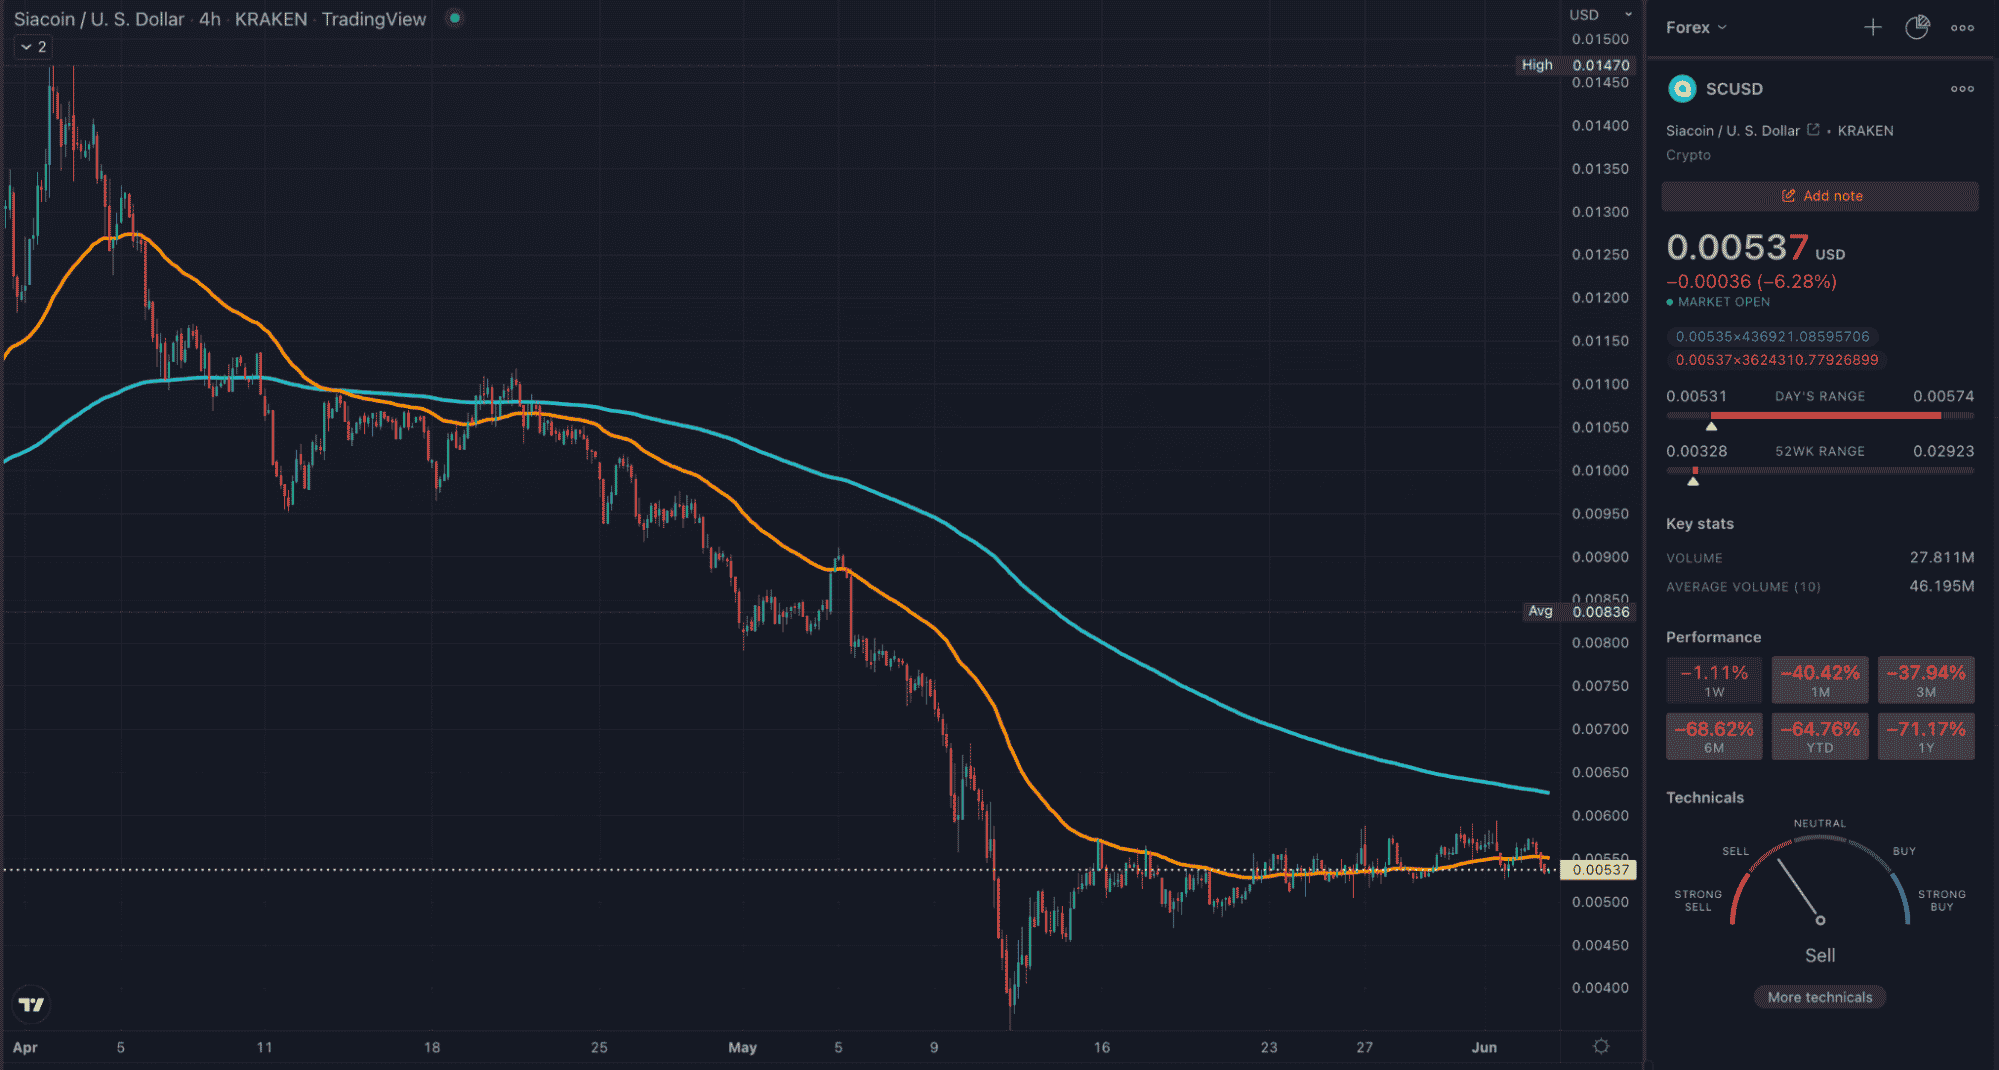 SC TradingView 4HR chart